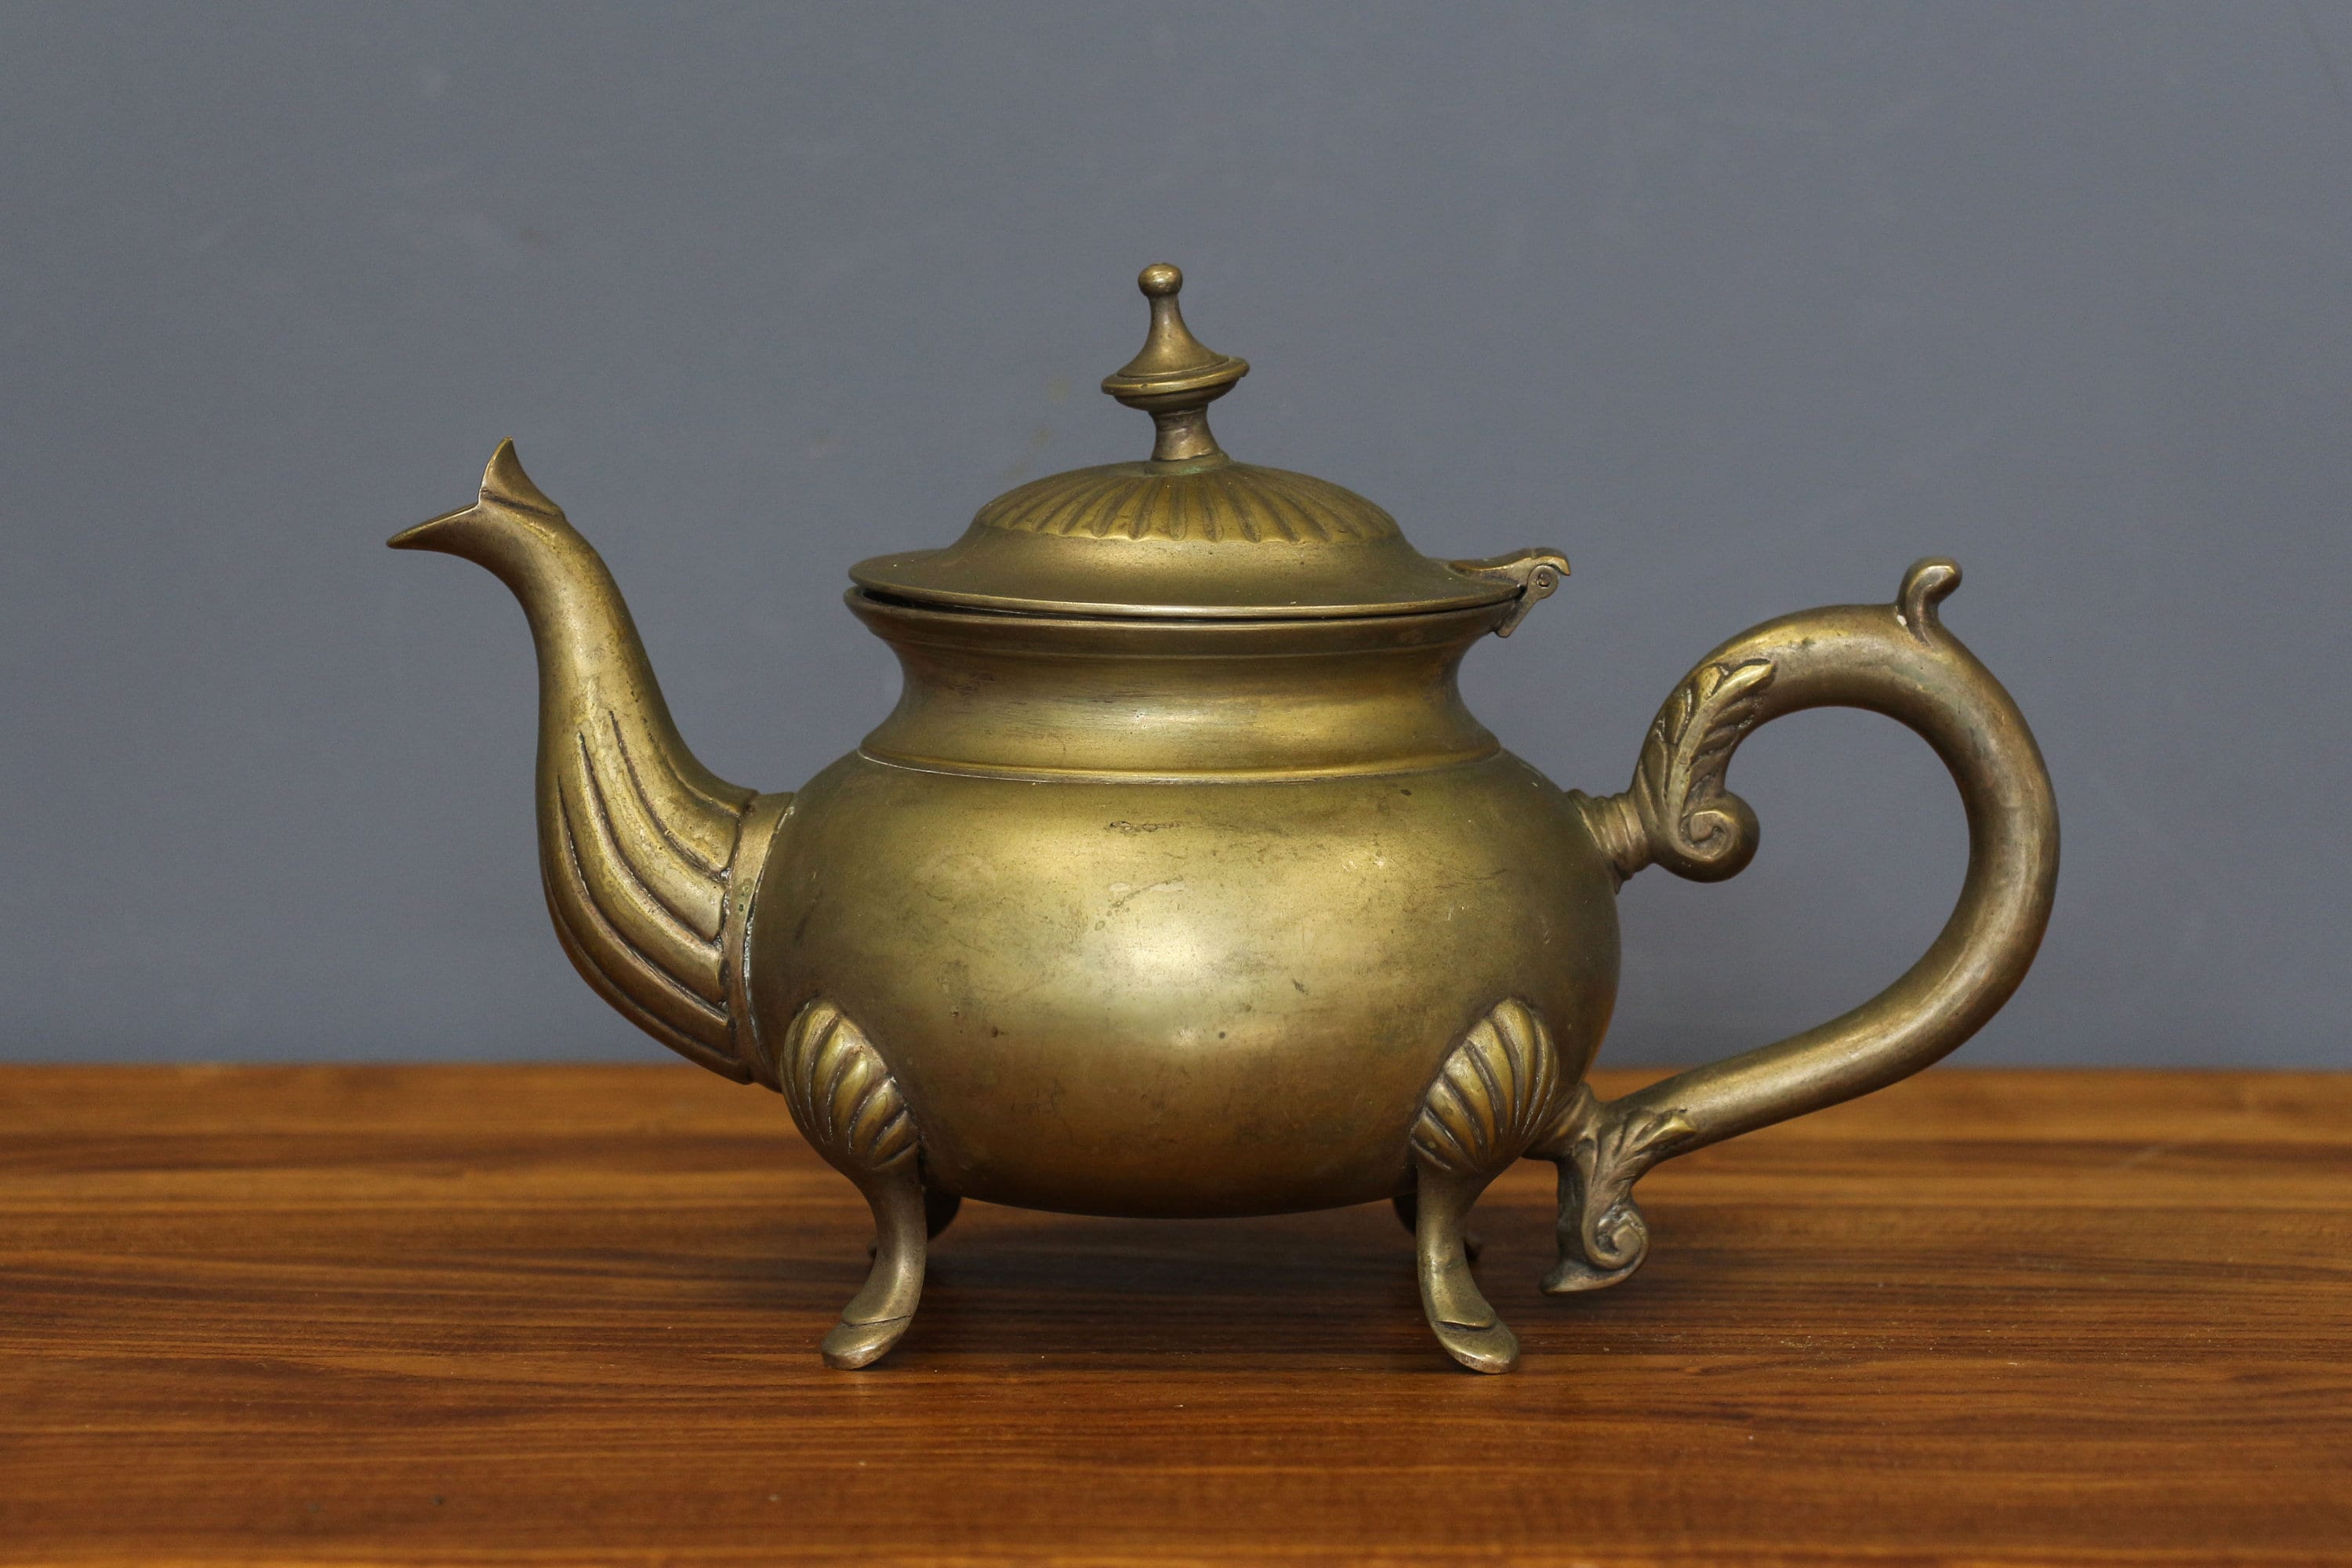 Vintage Brass 3 Footed Teapot Vintage Teapot, Tea Kettle, Brass